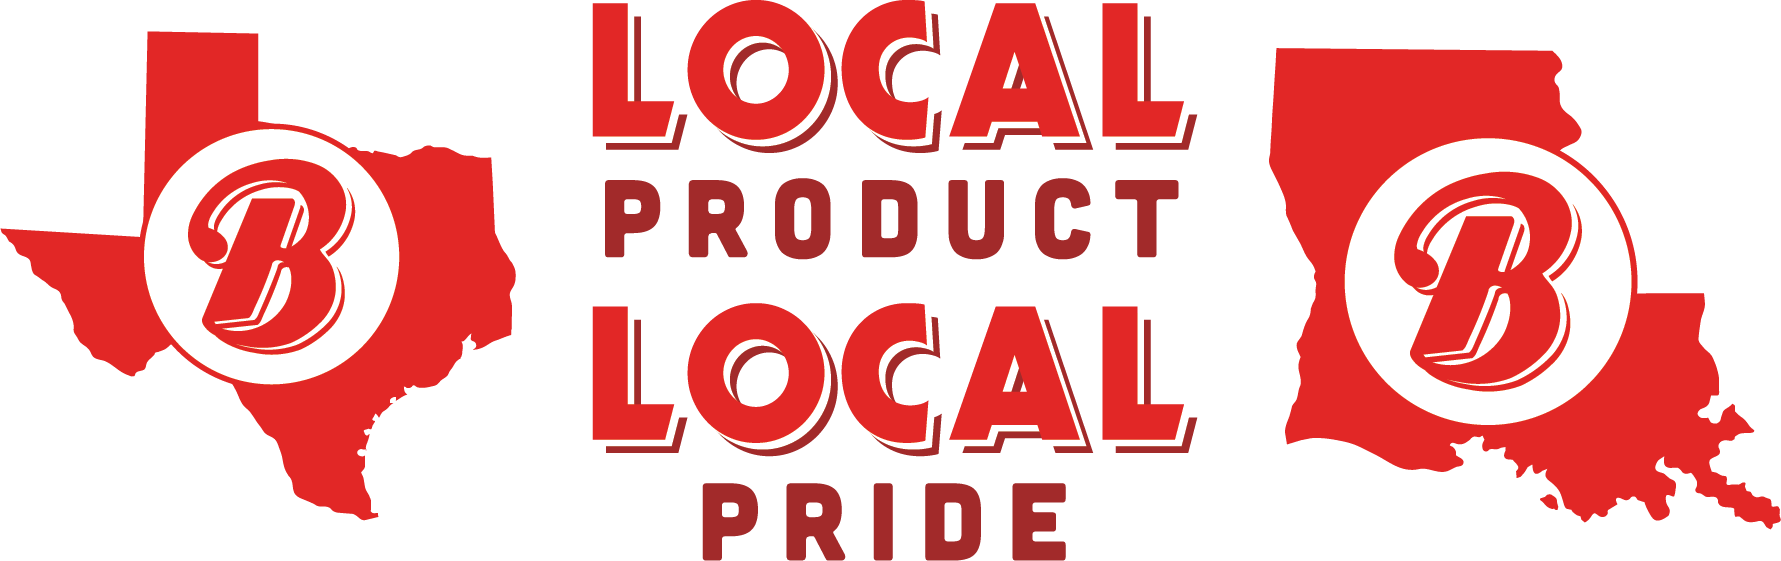 Local Product Local Pride